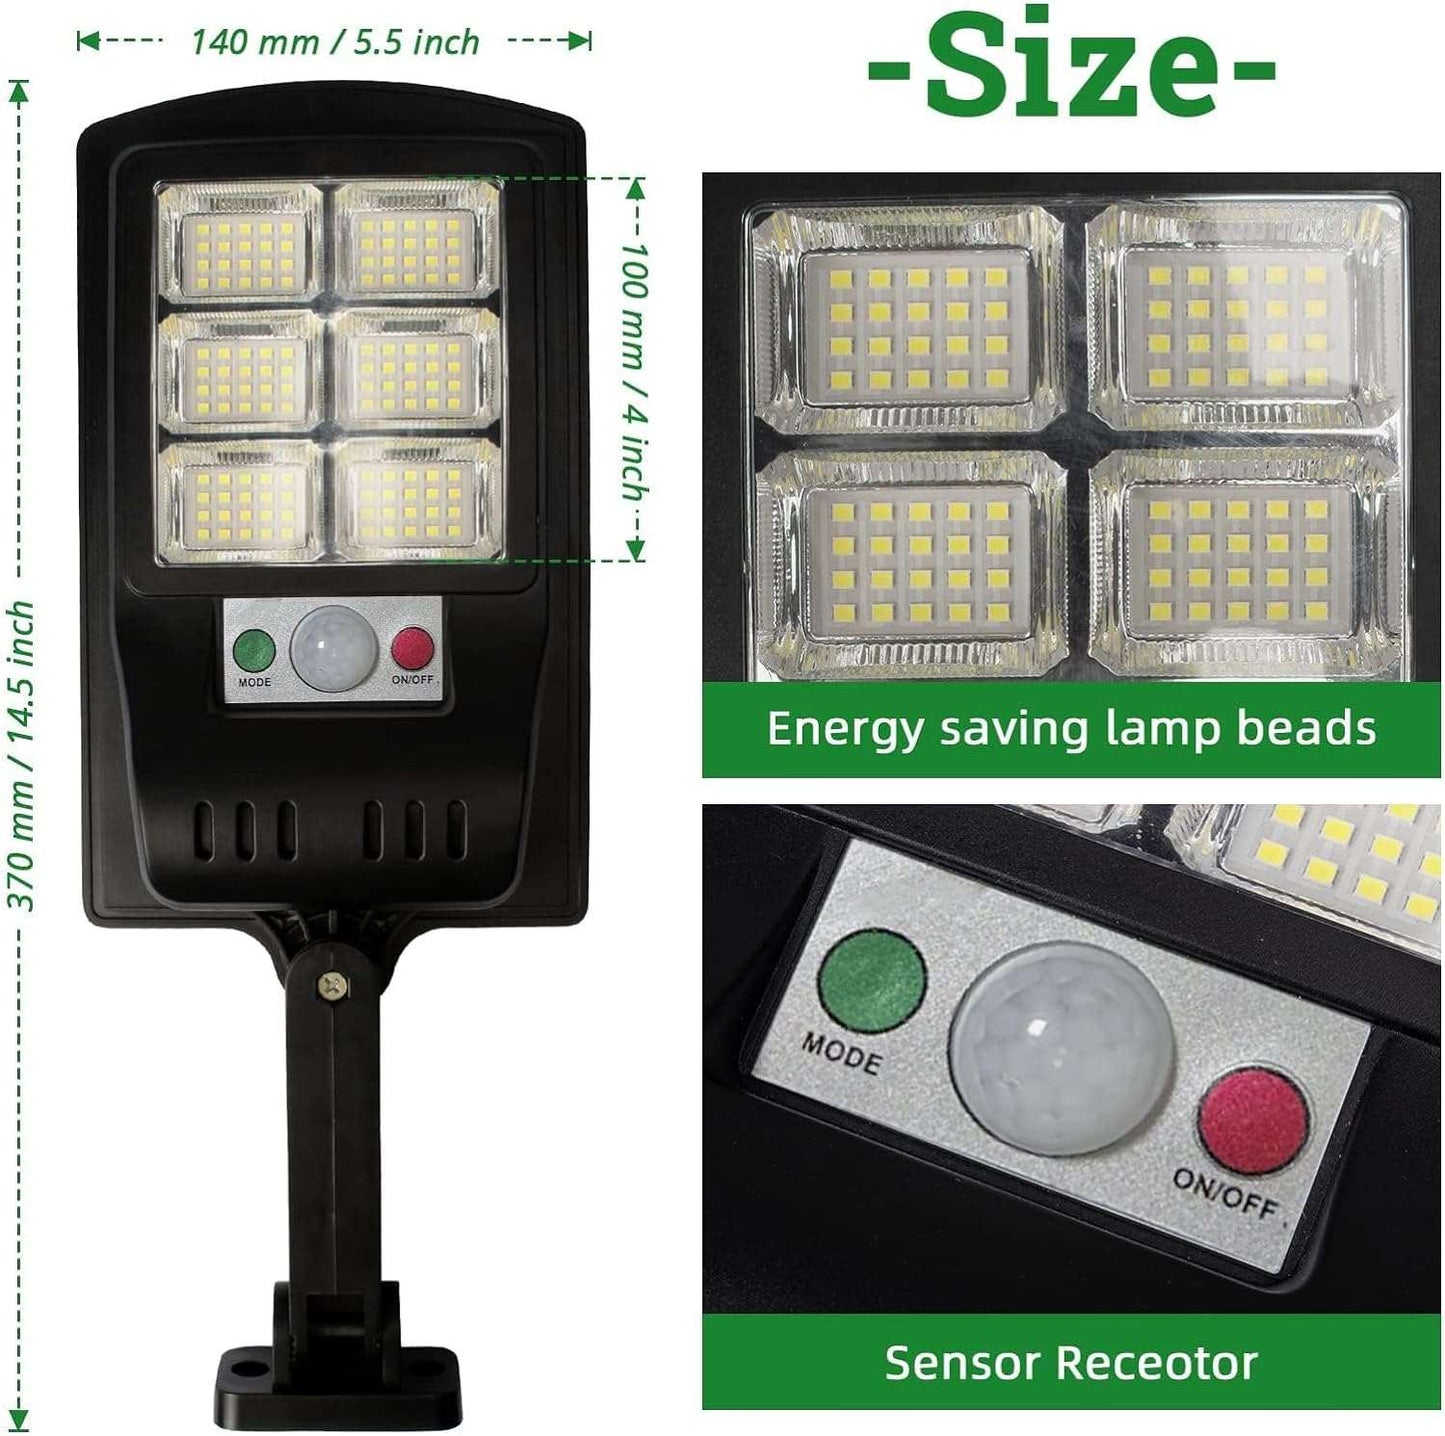 Iluminaria LED para poste o pared, pídela ya antes que se acabe a $50.00 / LED luminaire for post or wall, ask it before ending at $ 50.00